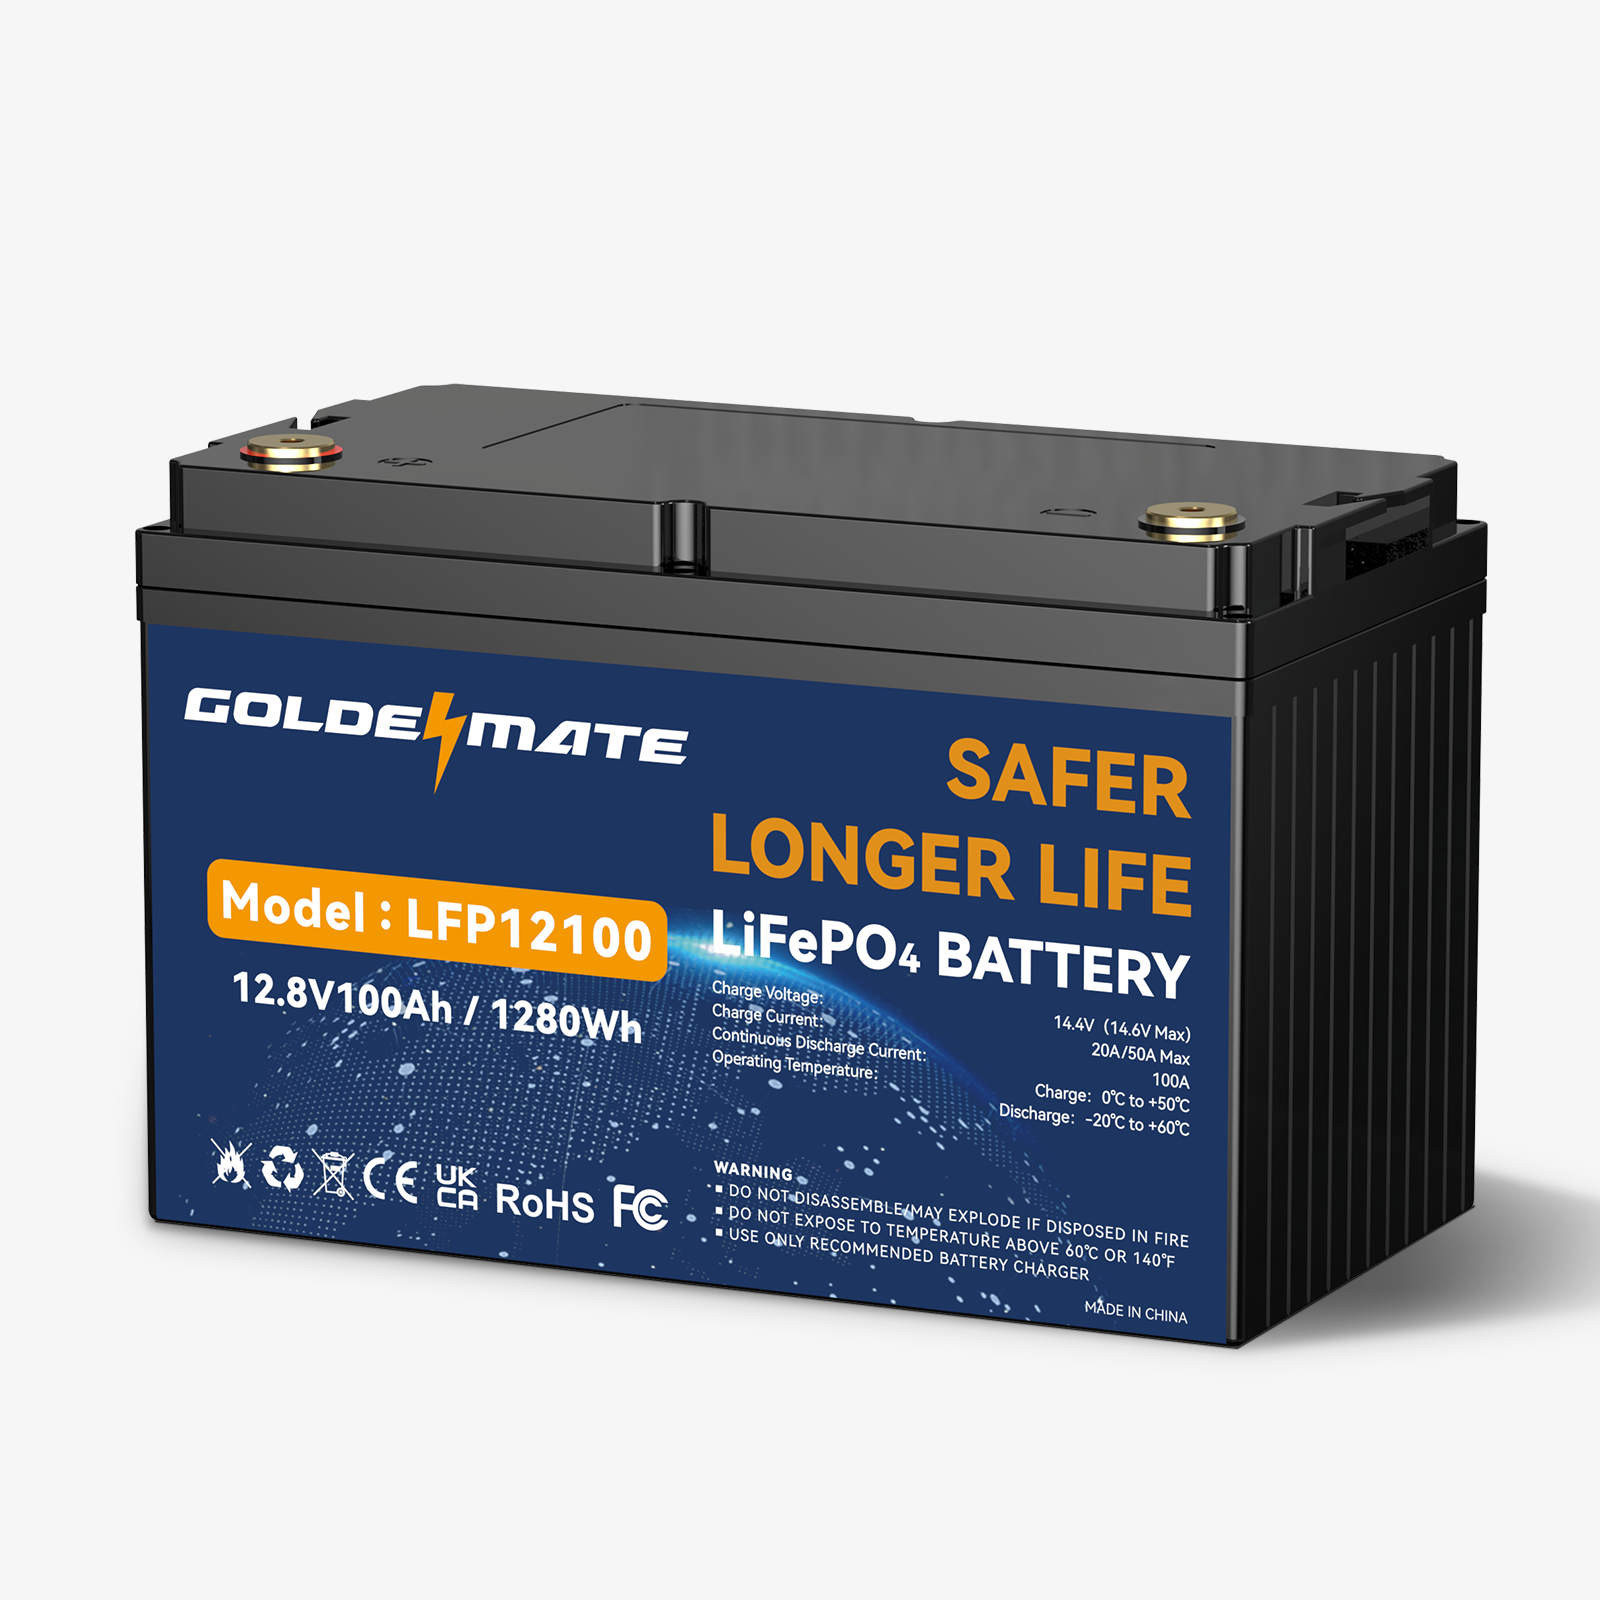 GoldenMate 12V 100Ah LiFePO4 Lithium Battery, 1280Wh Energy, Built-In BMS